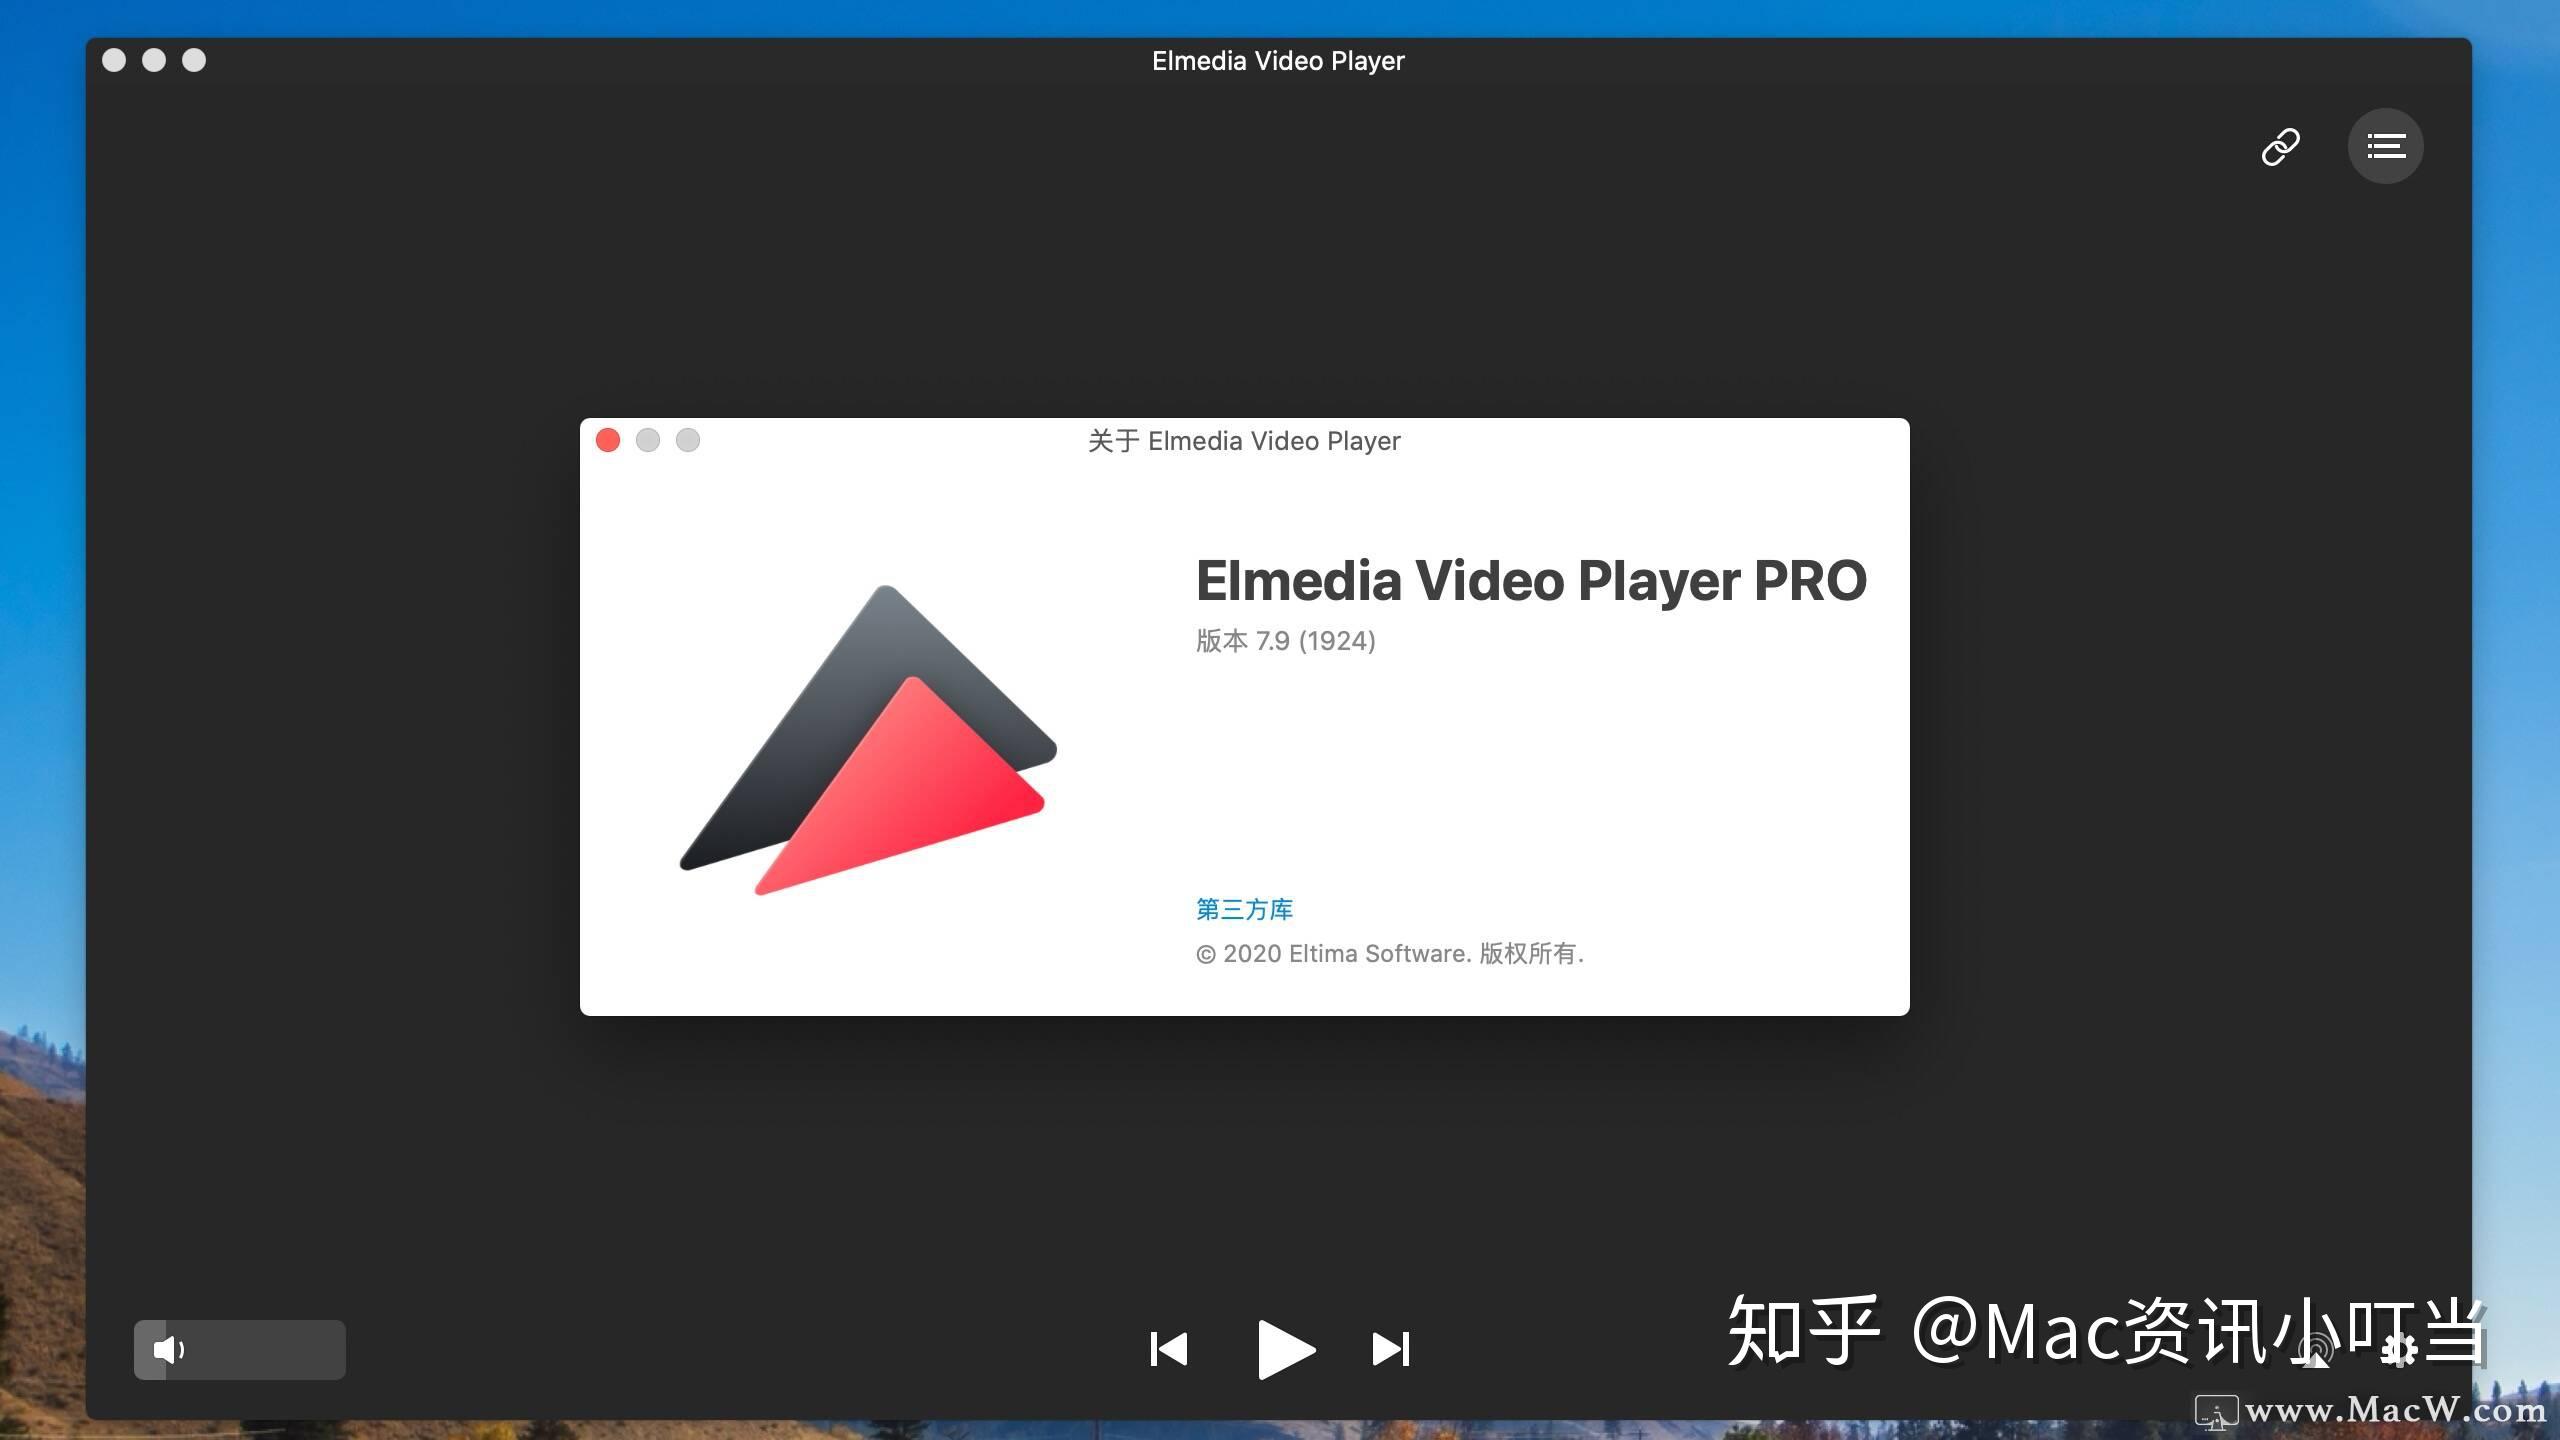 Elmedia Player Pro for apple download free